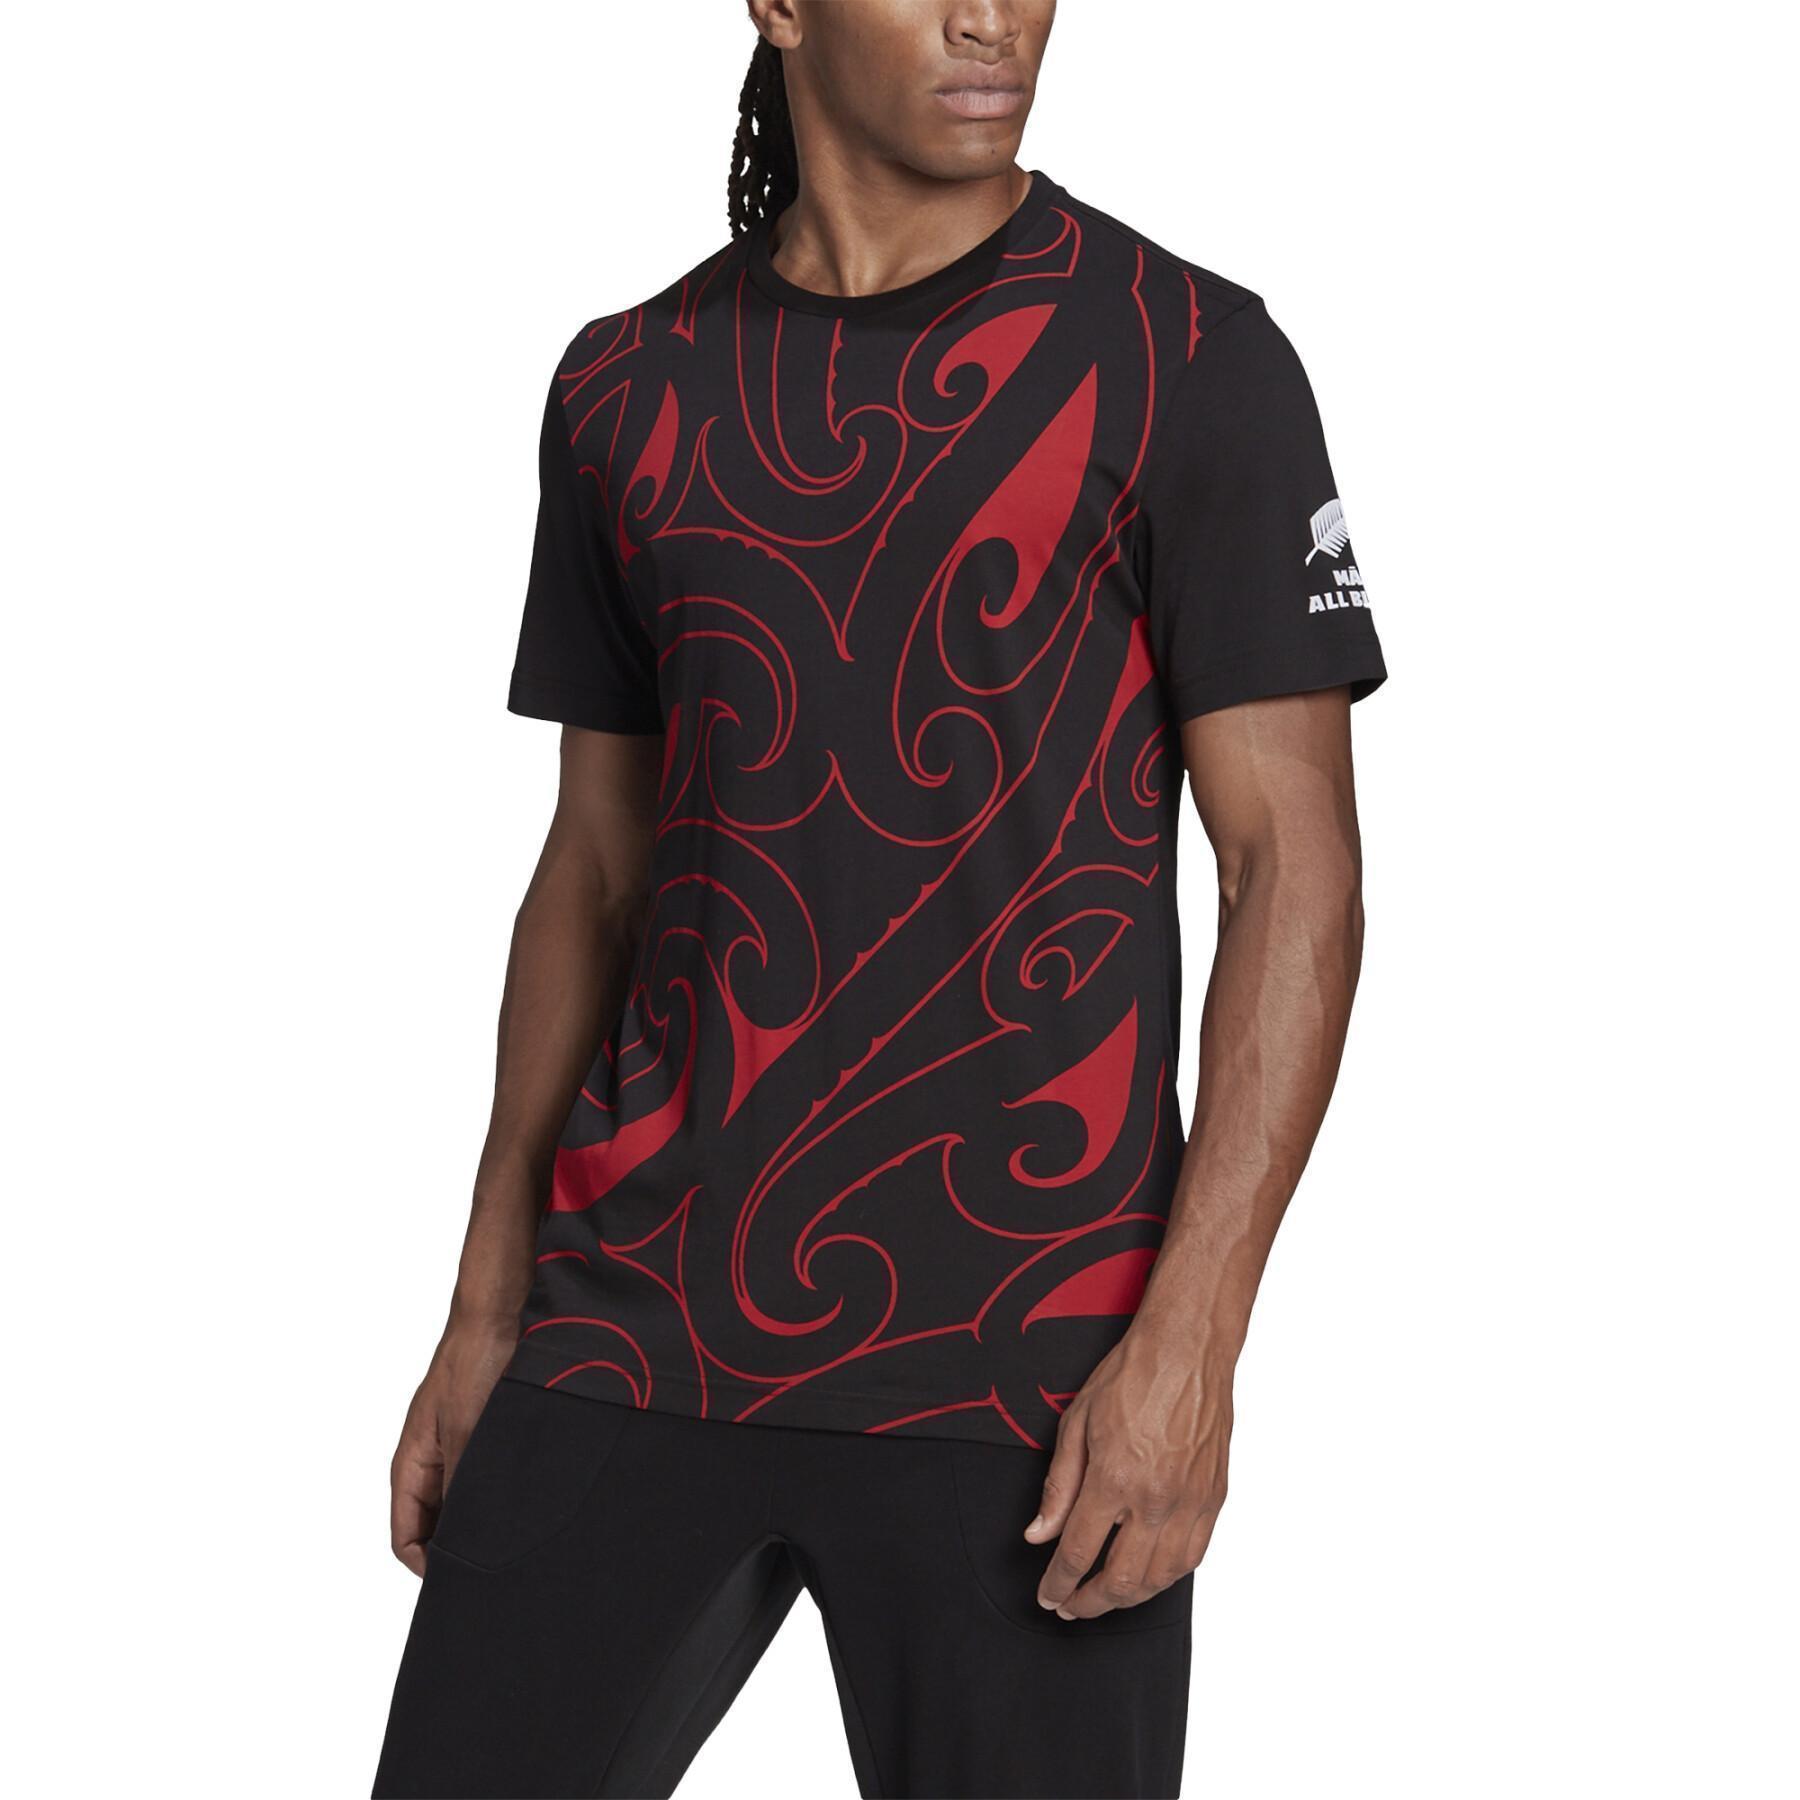 Maori-T-Shirt All Blacks Graphic